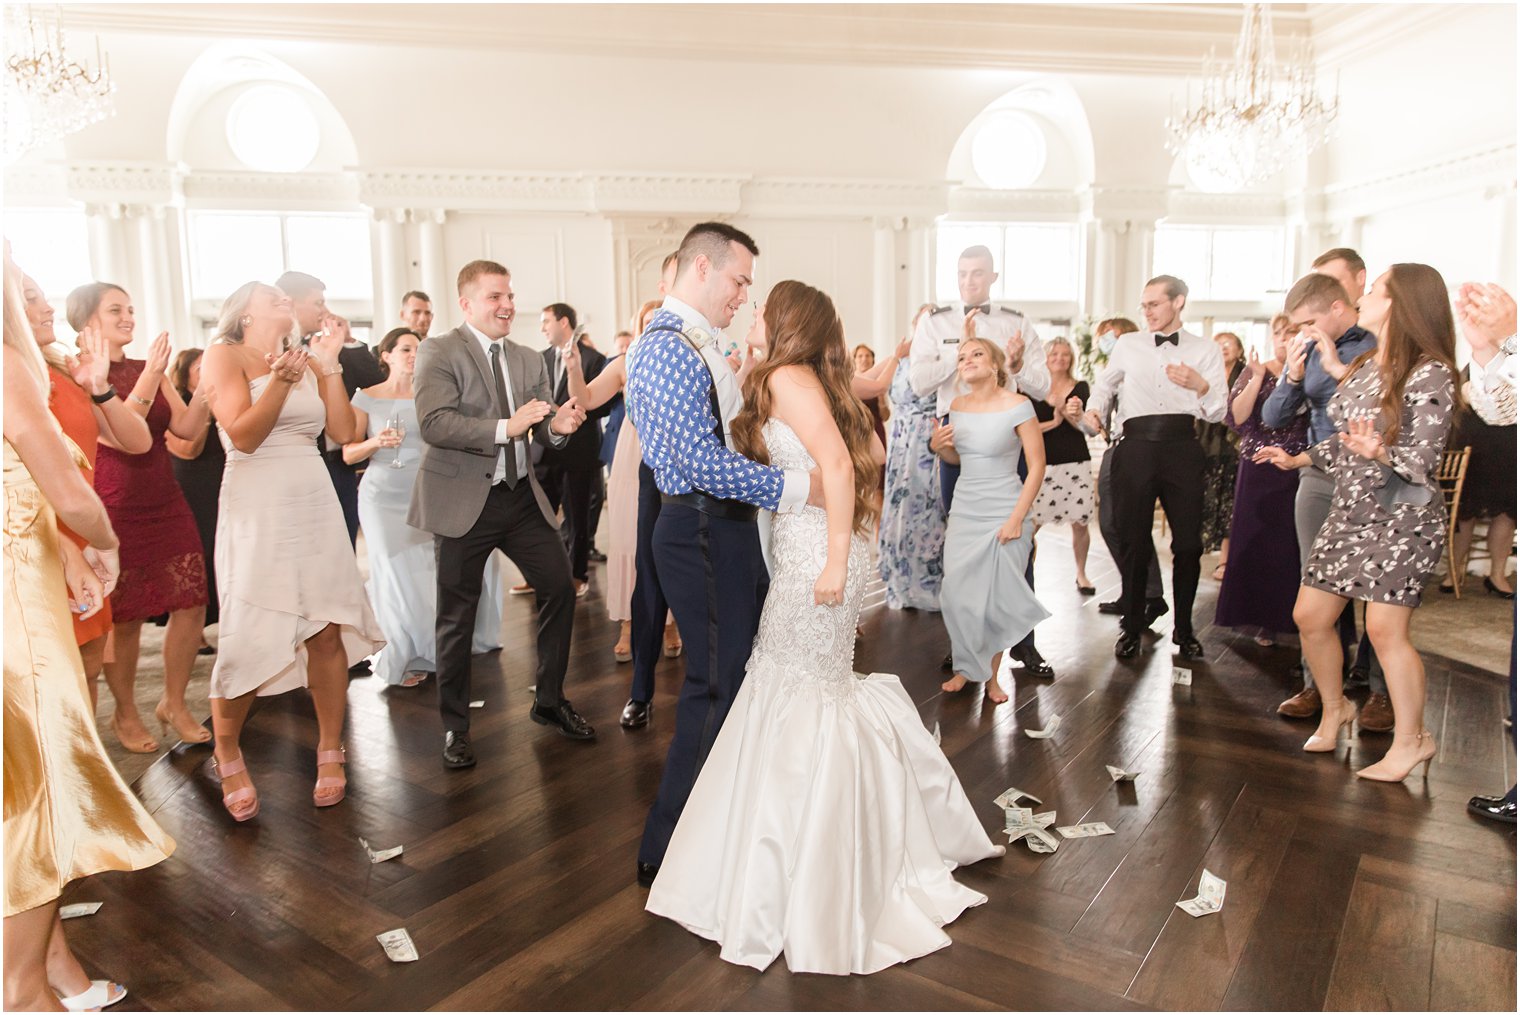 couple dances during dollar dance at East Brunswick NJ wedding reception